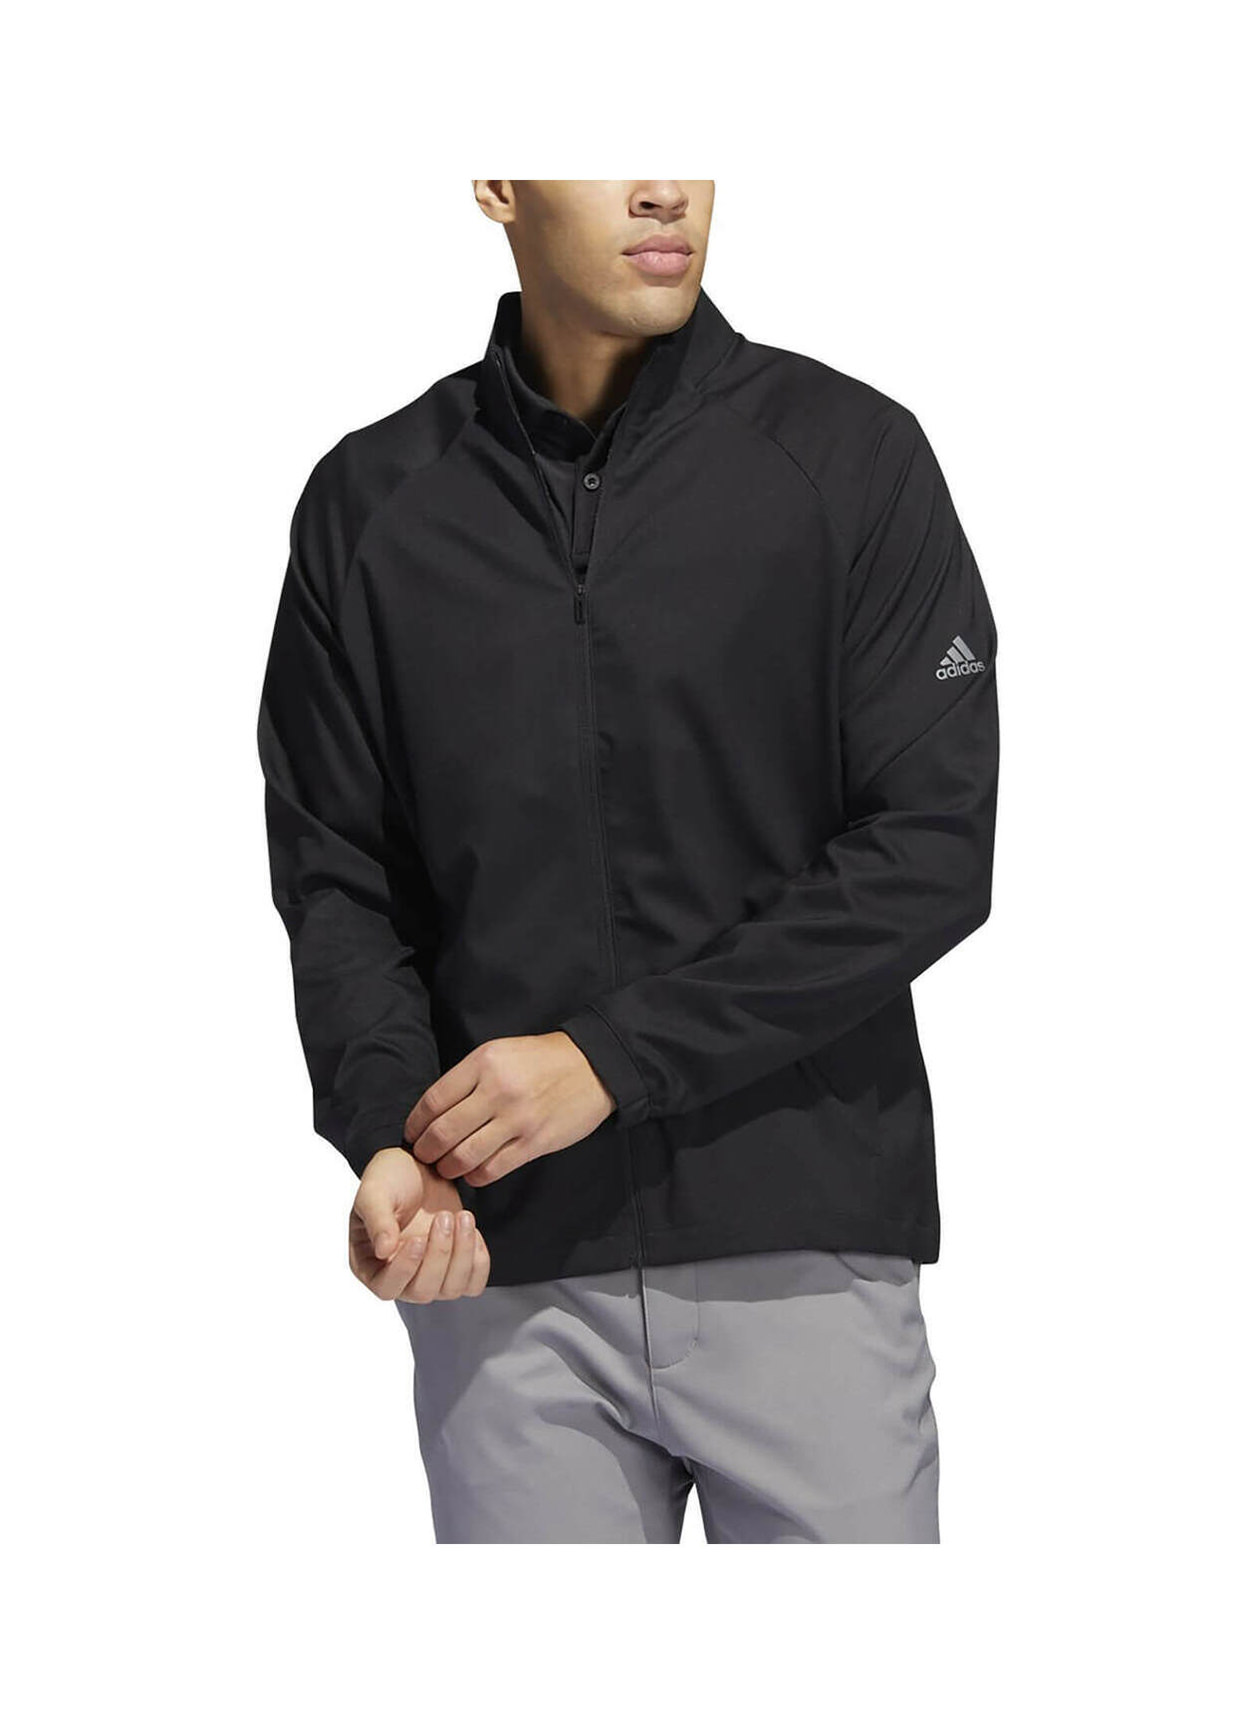 Men's Black Golf Primegreen Jacket